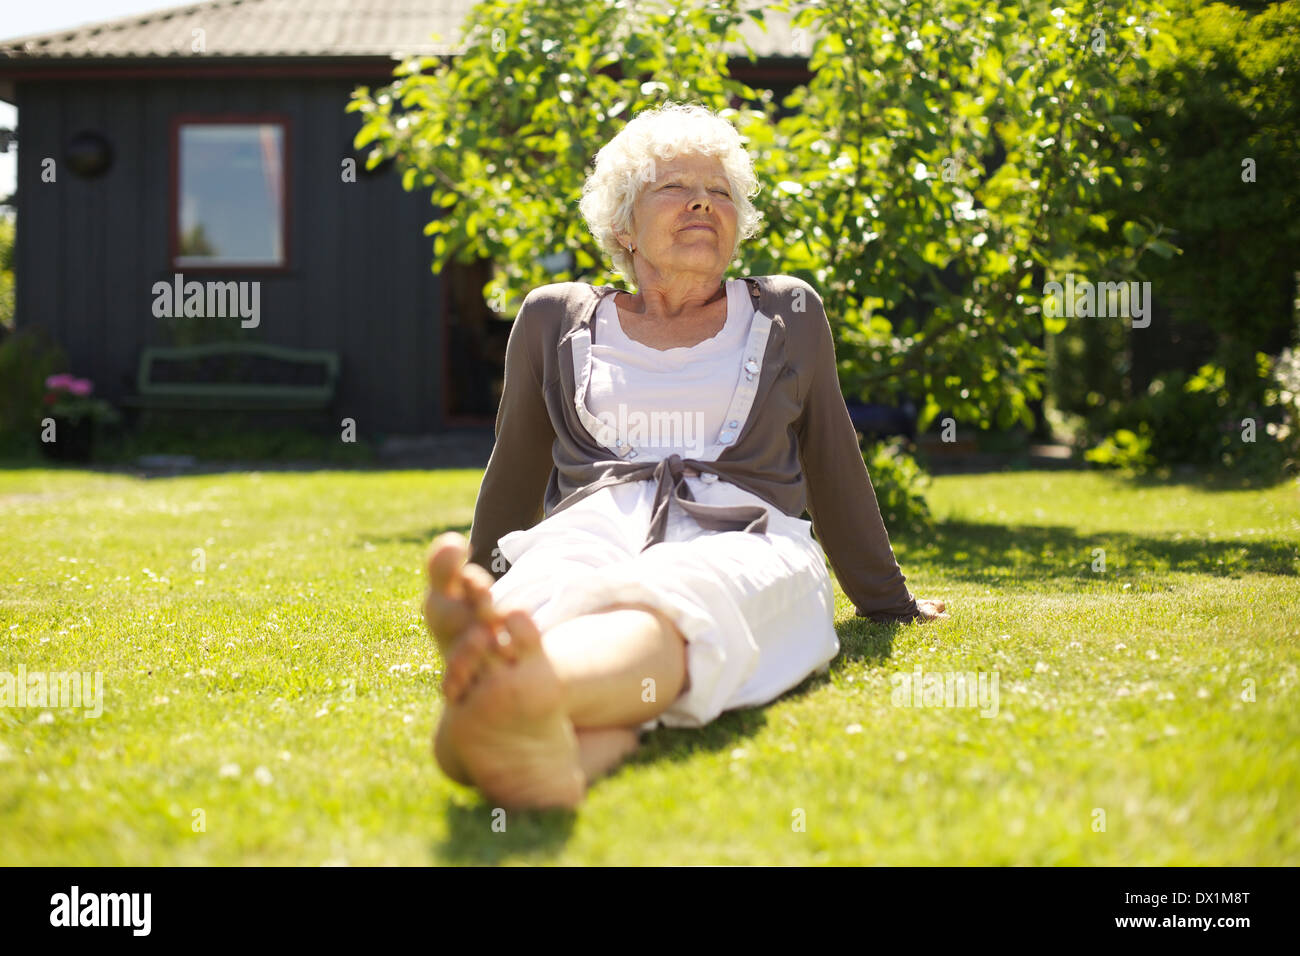 Senior woman sitting relaxed on grass in backyard garden outdoors Stock Photo